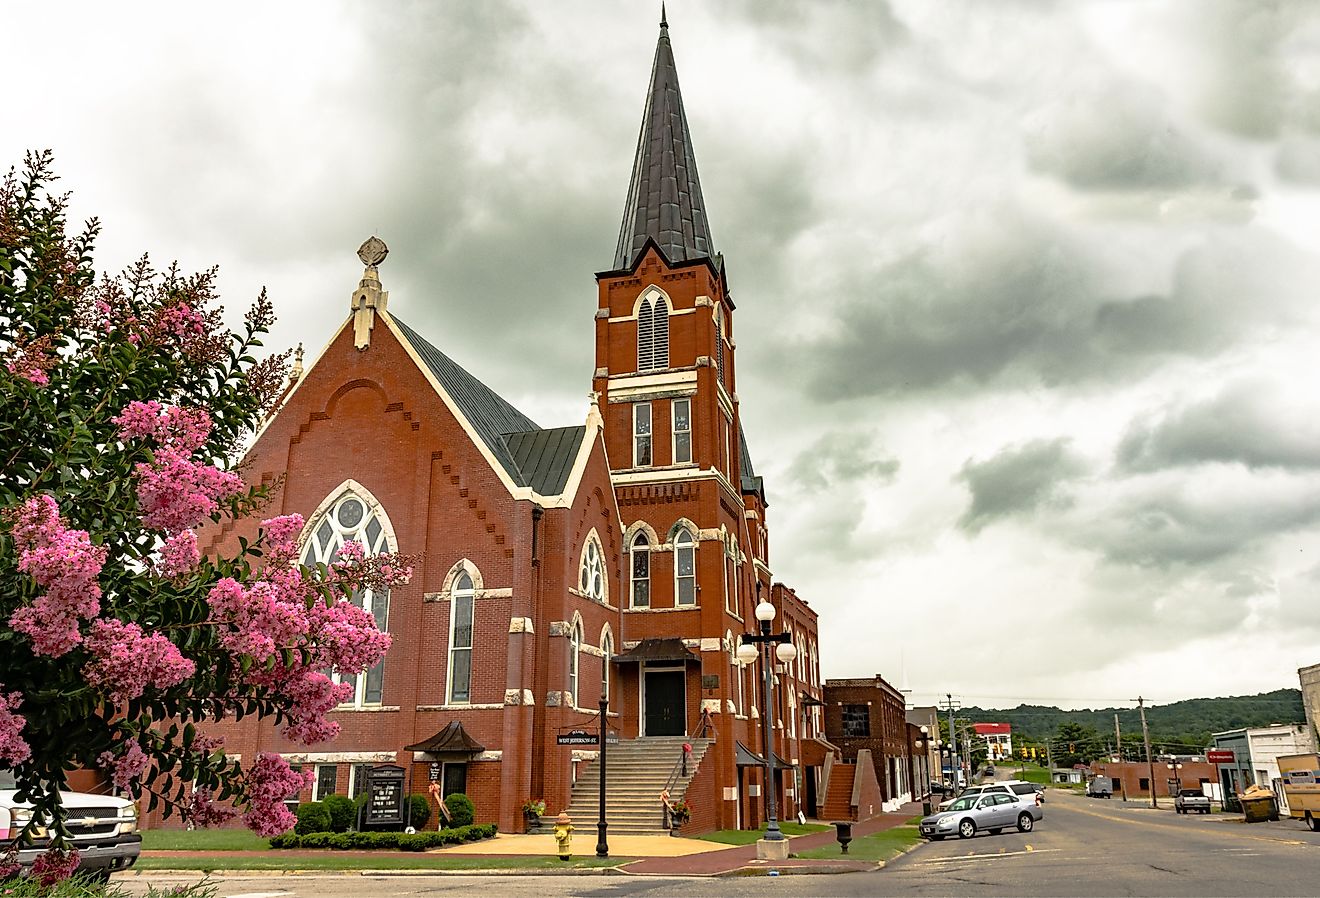 First Methodist Church in Pulaski, Tennessee. Image credit JNix via Shutterstock